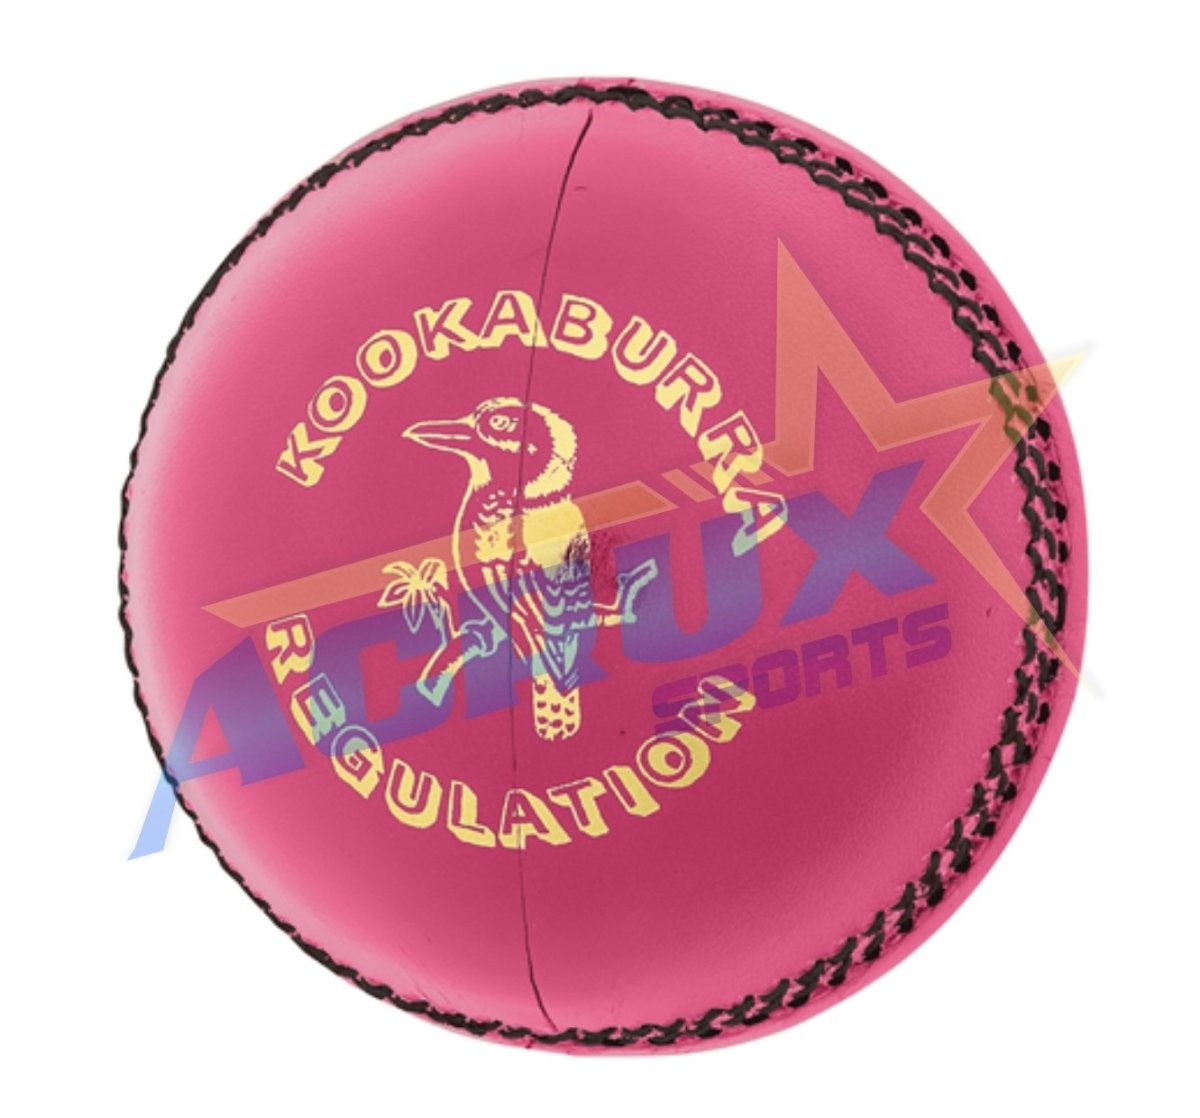 Kookaburra Regulation Reject Cricket Ball Pack of 12.